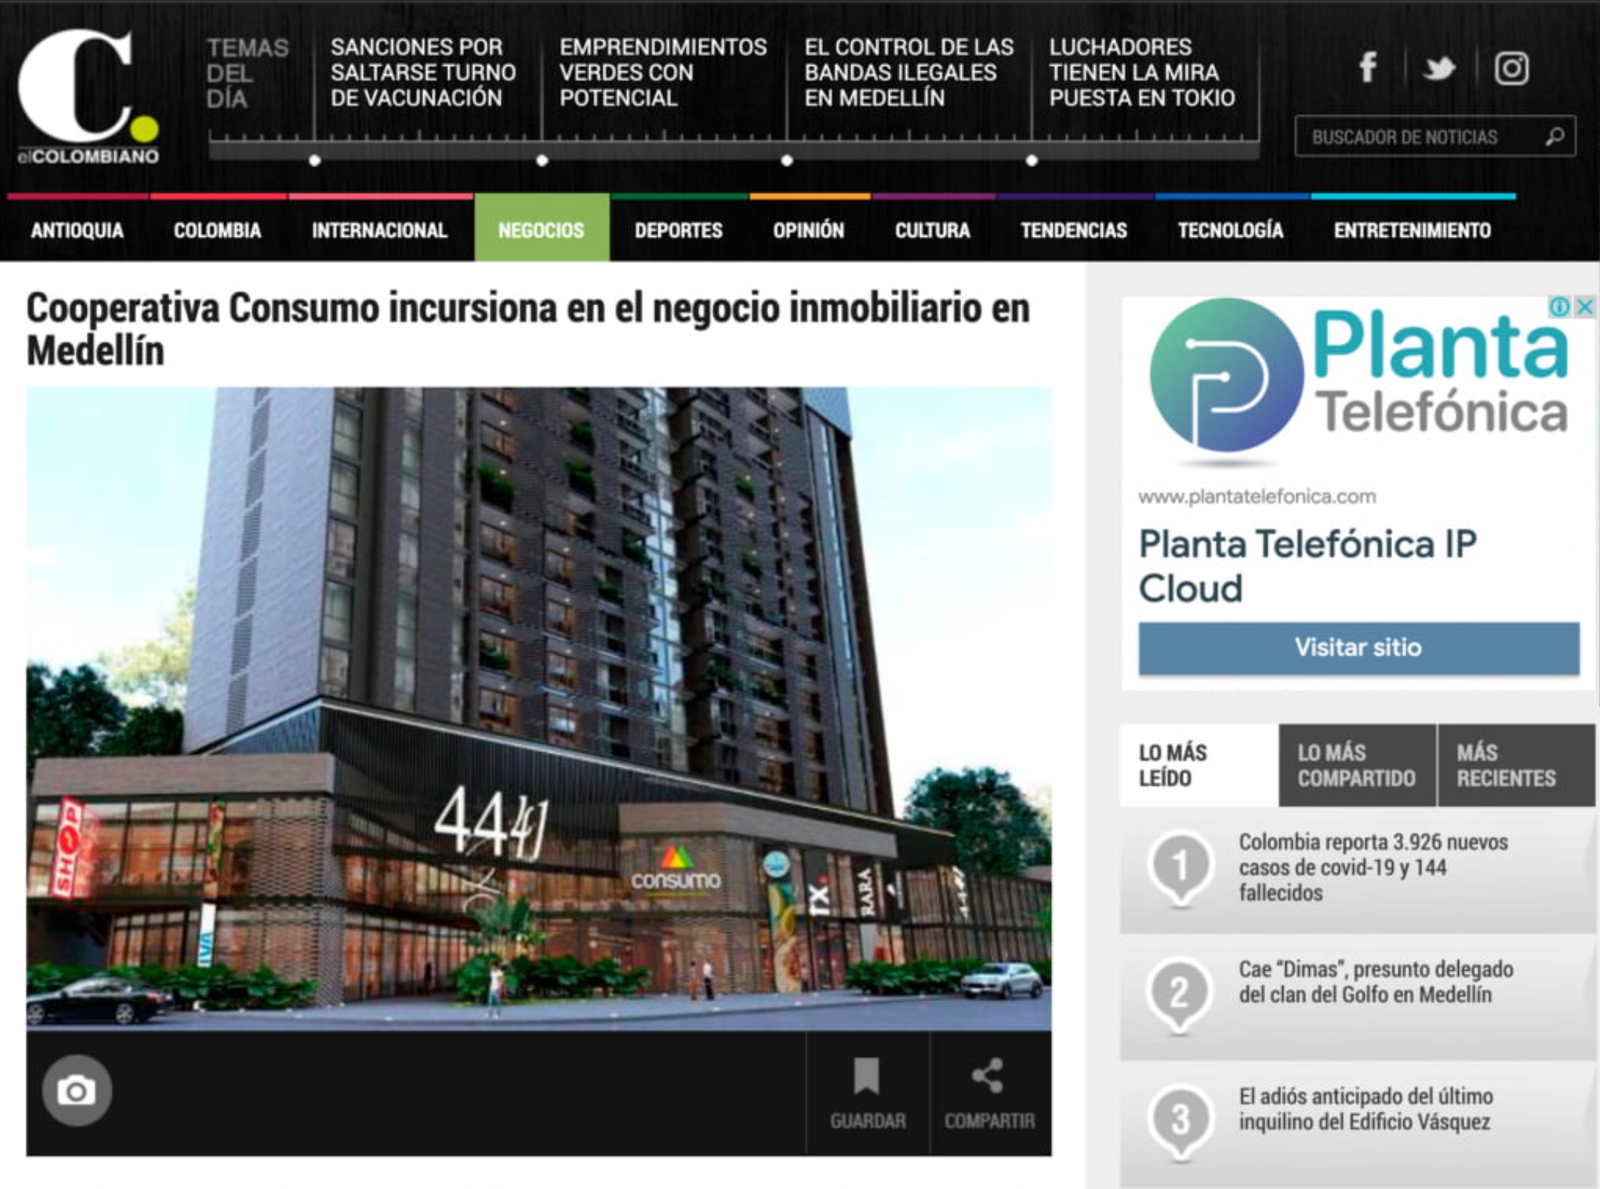 Article in El Colombiano Belén CityM consumer real estate project